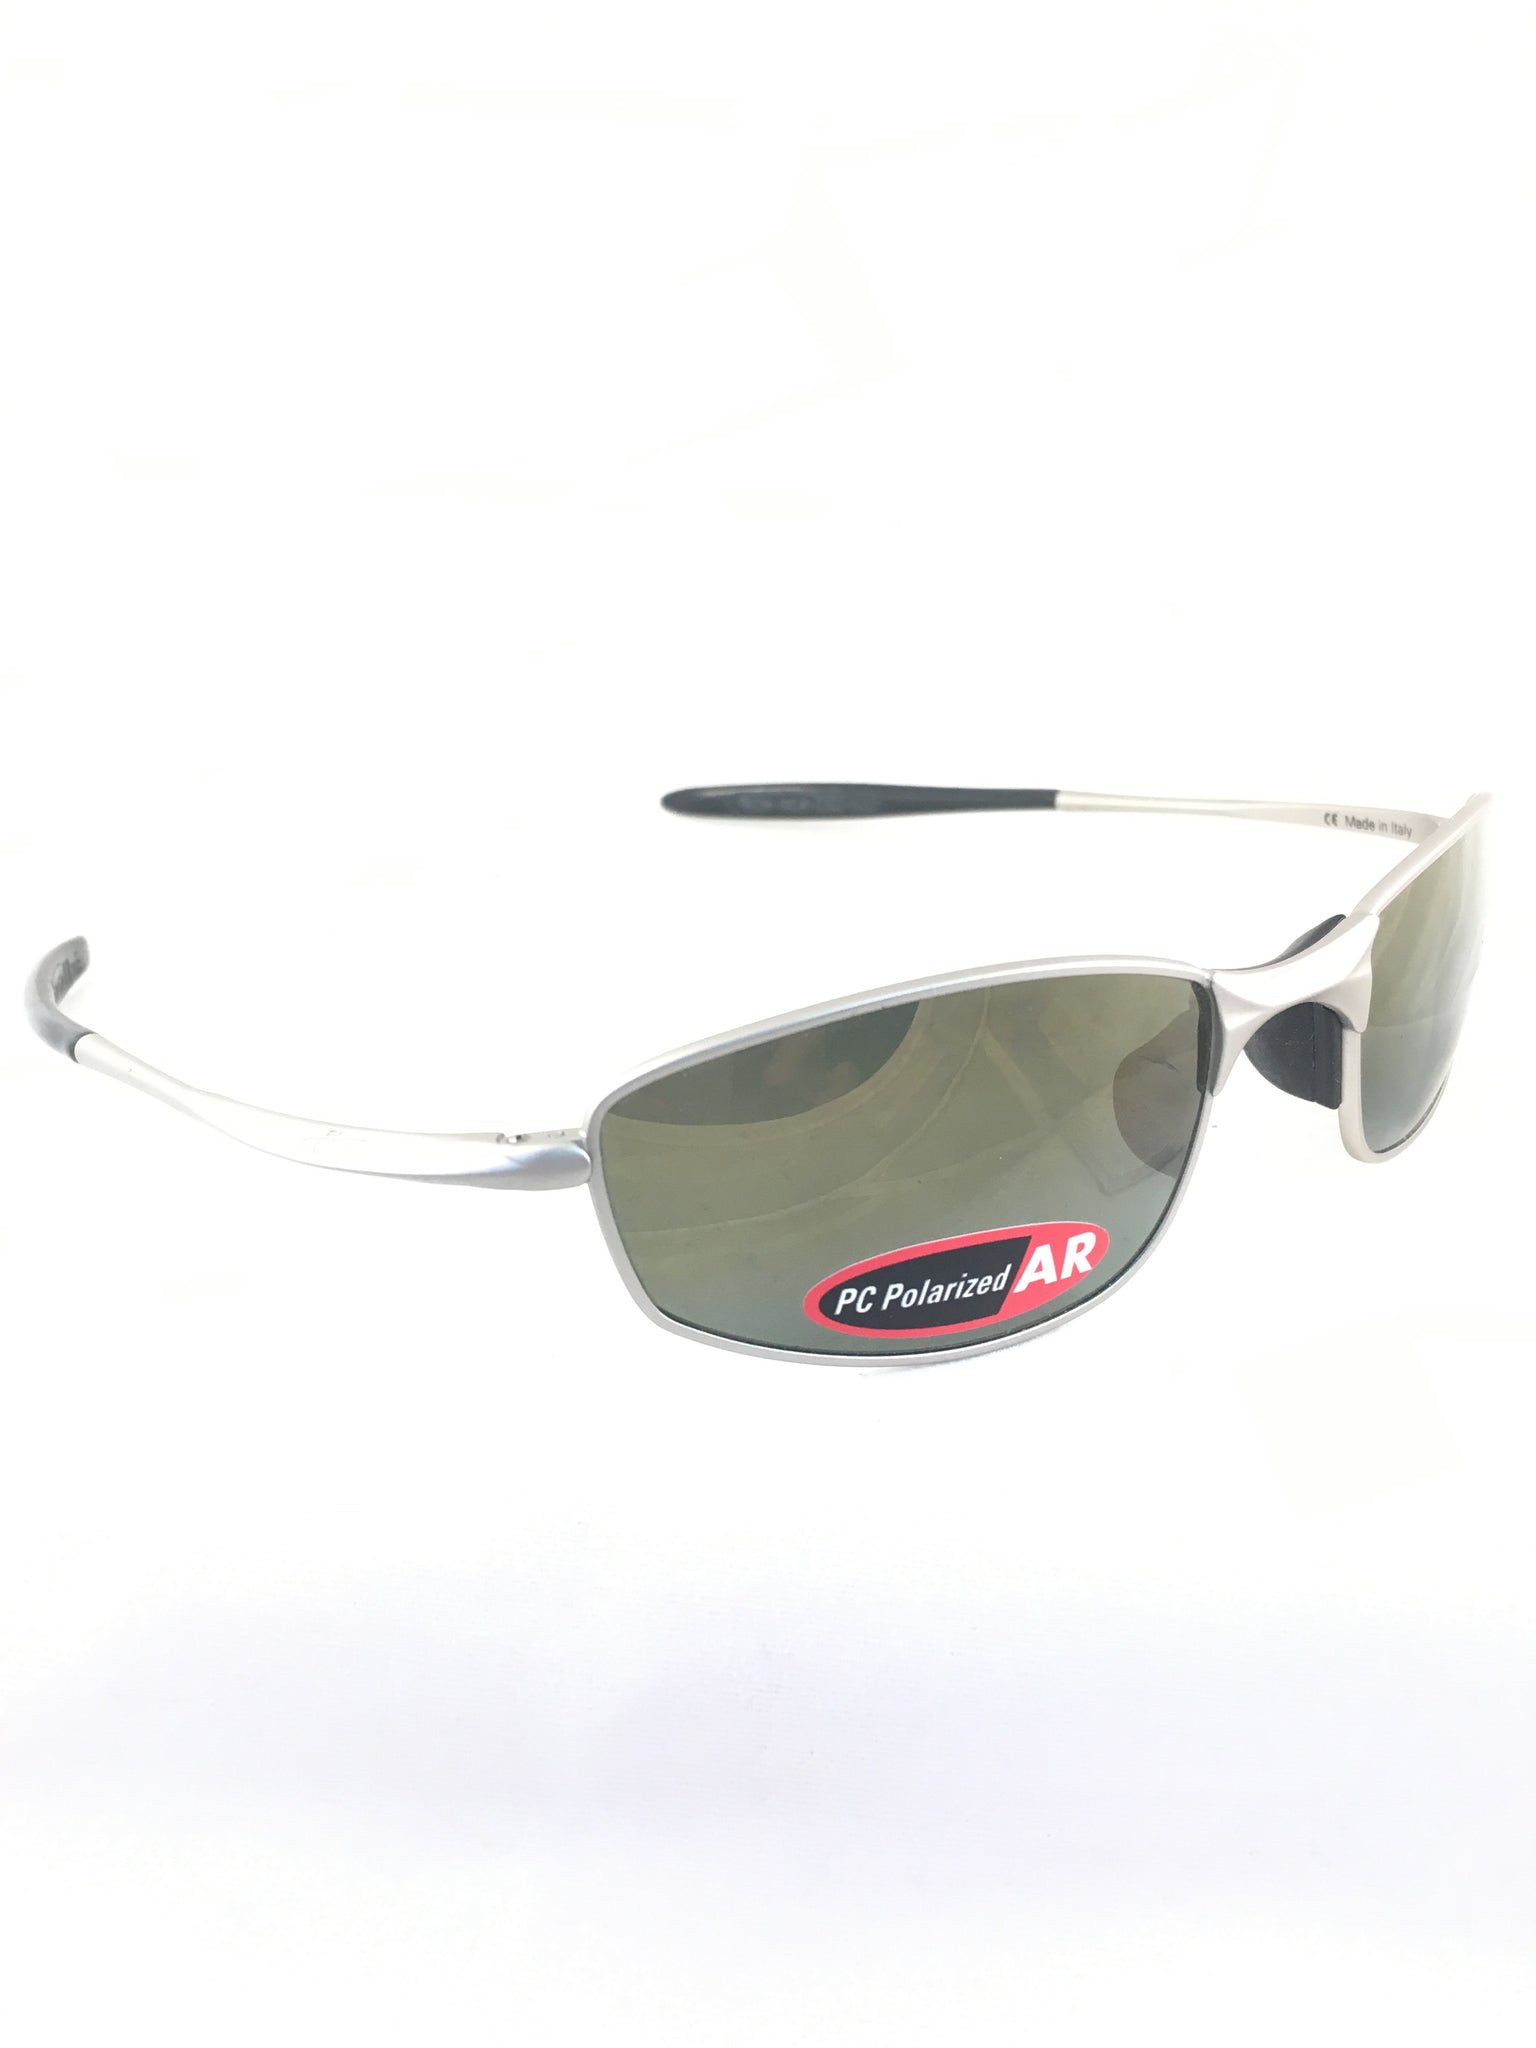 Fishing Sunglasses - Windward Series